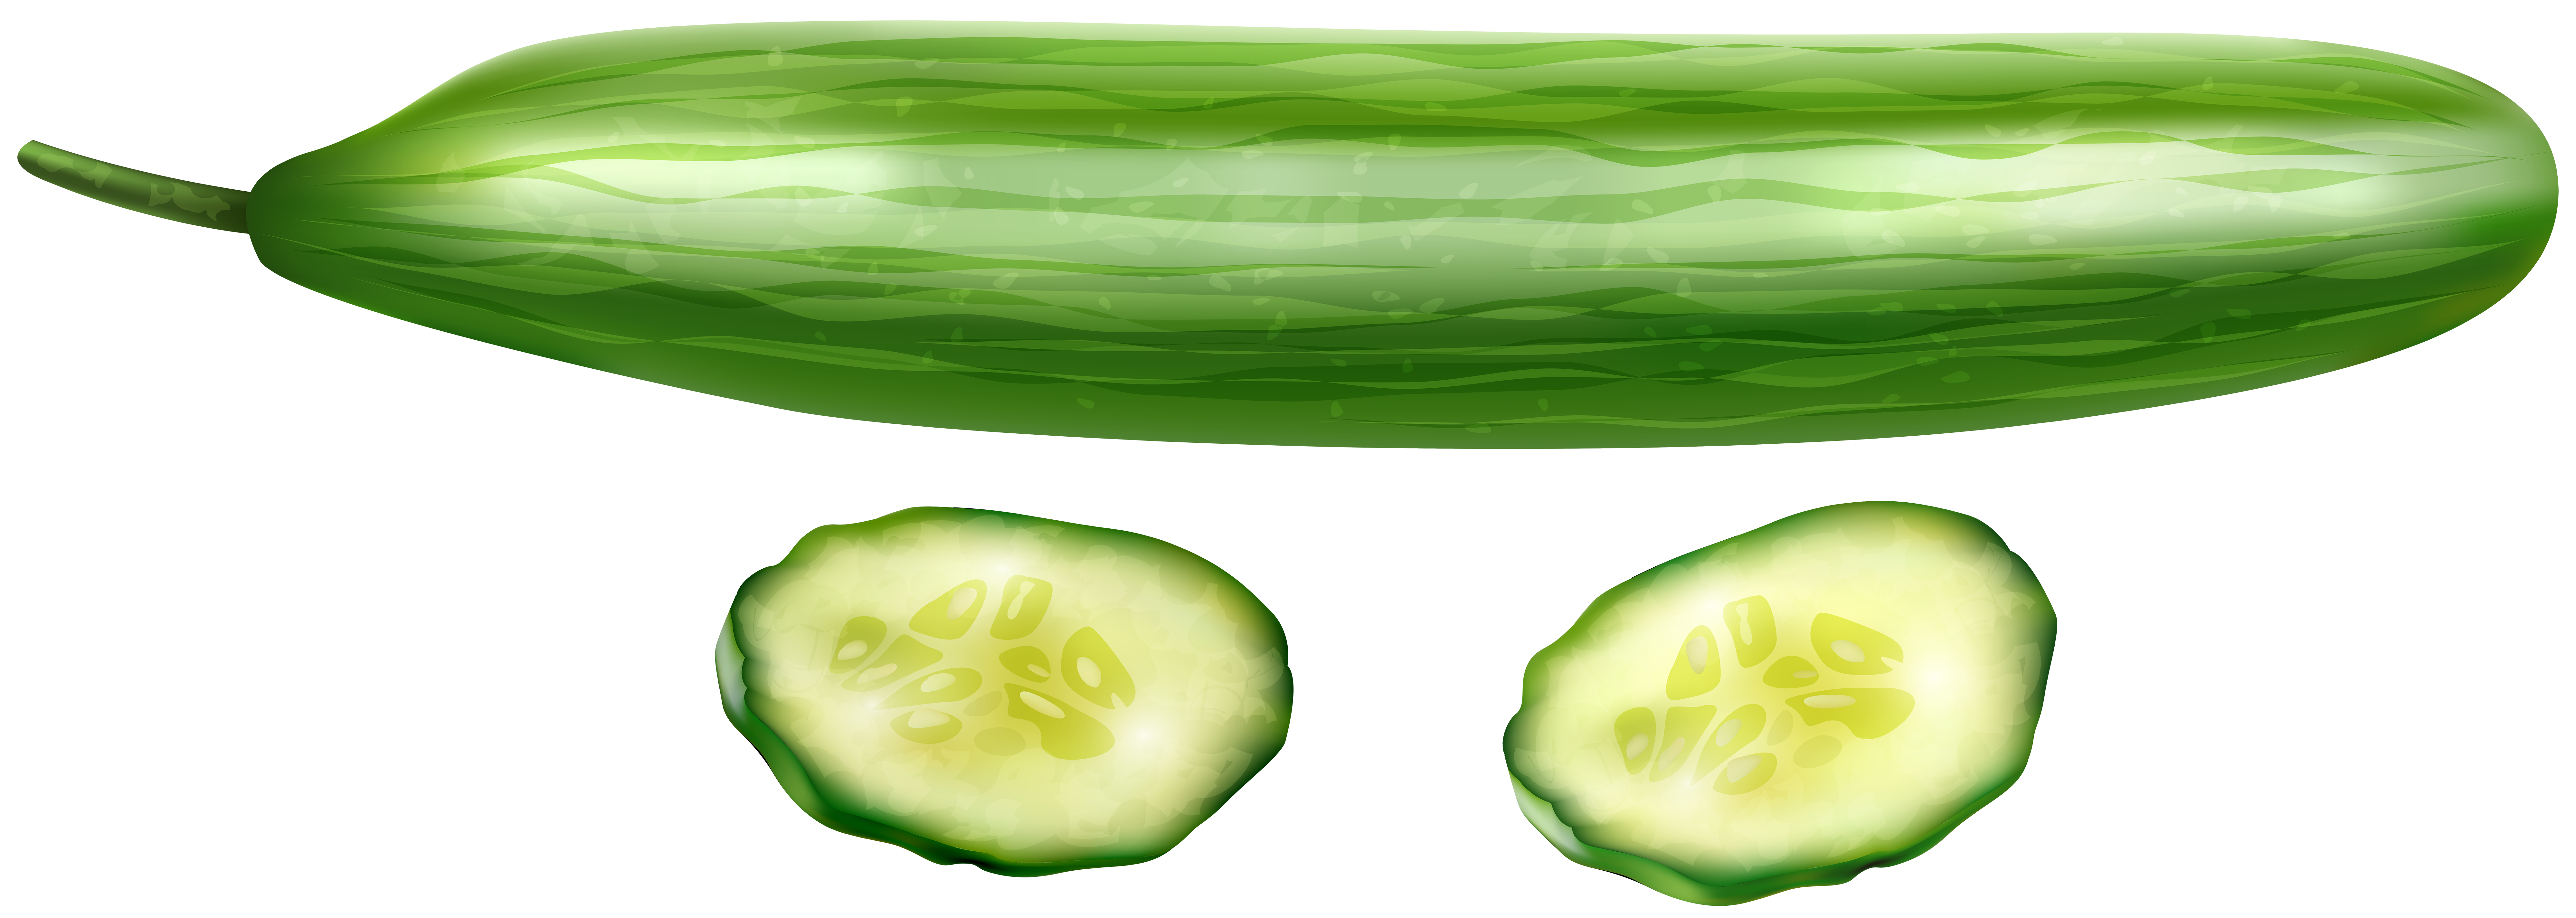 cucumber clipart border